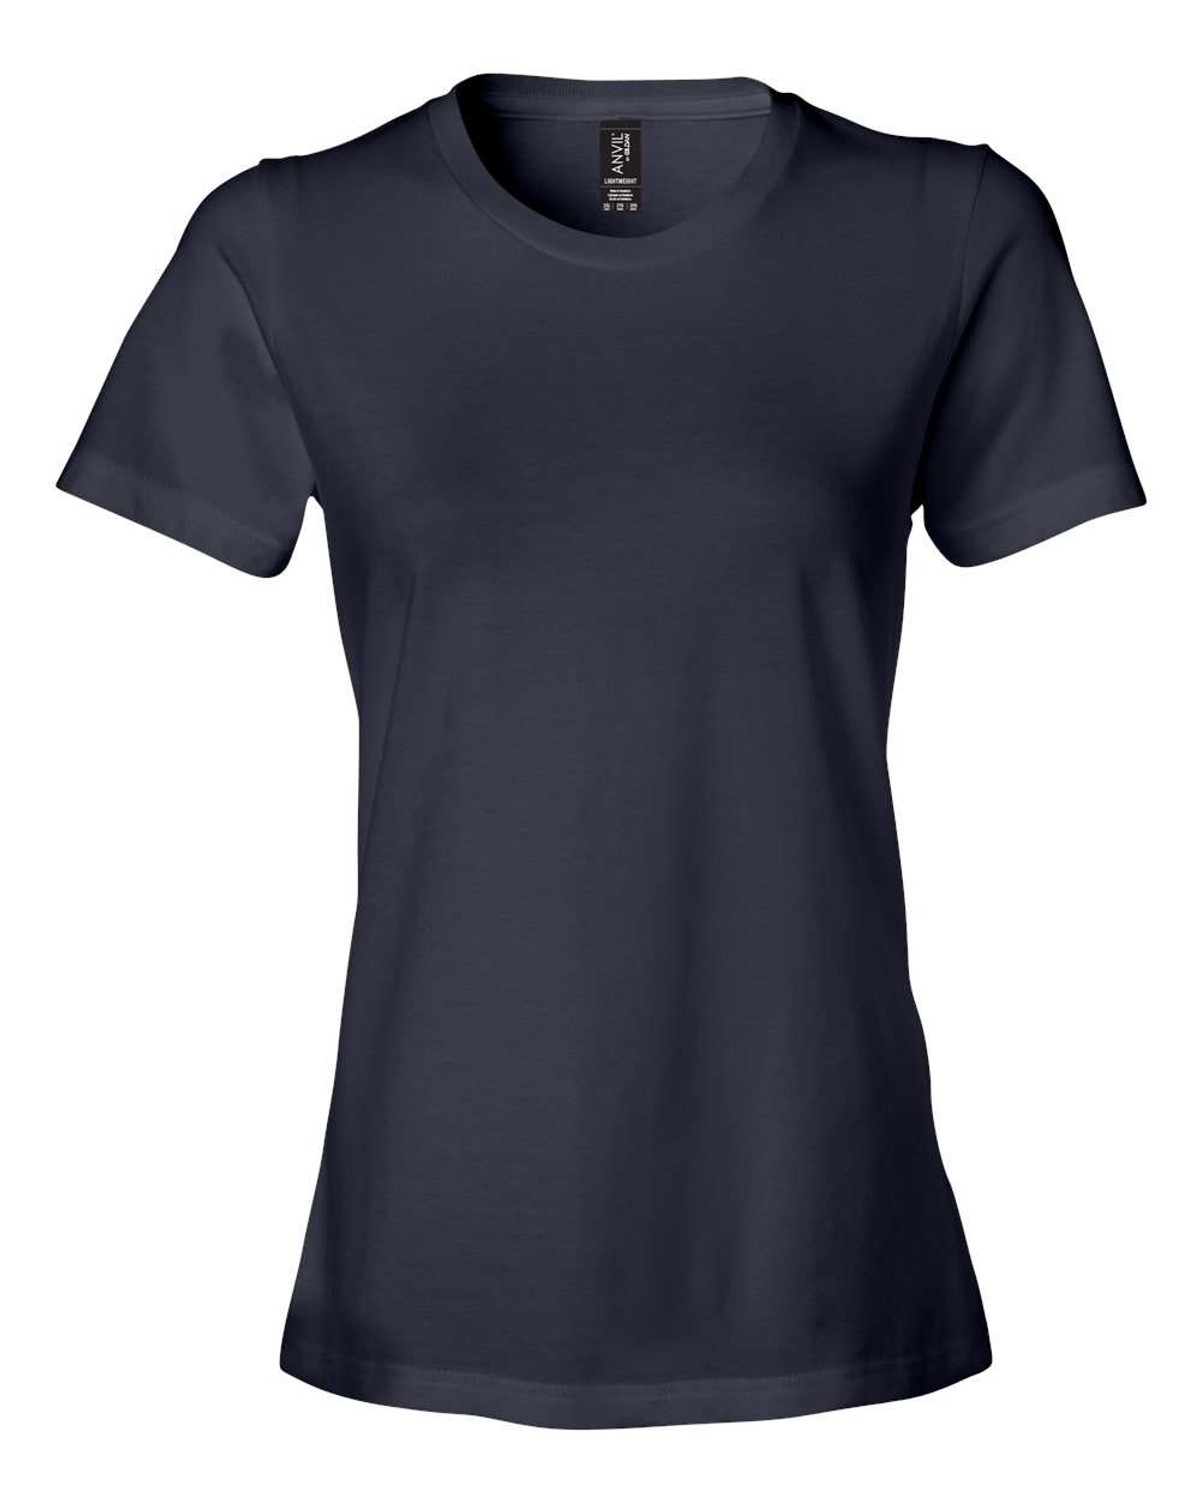 Anvil by Gildan 880, Ladies 100% Combed Ring Spun Cotton T-Shirt